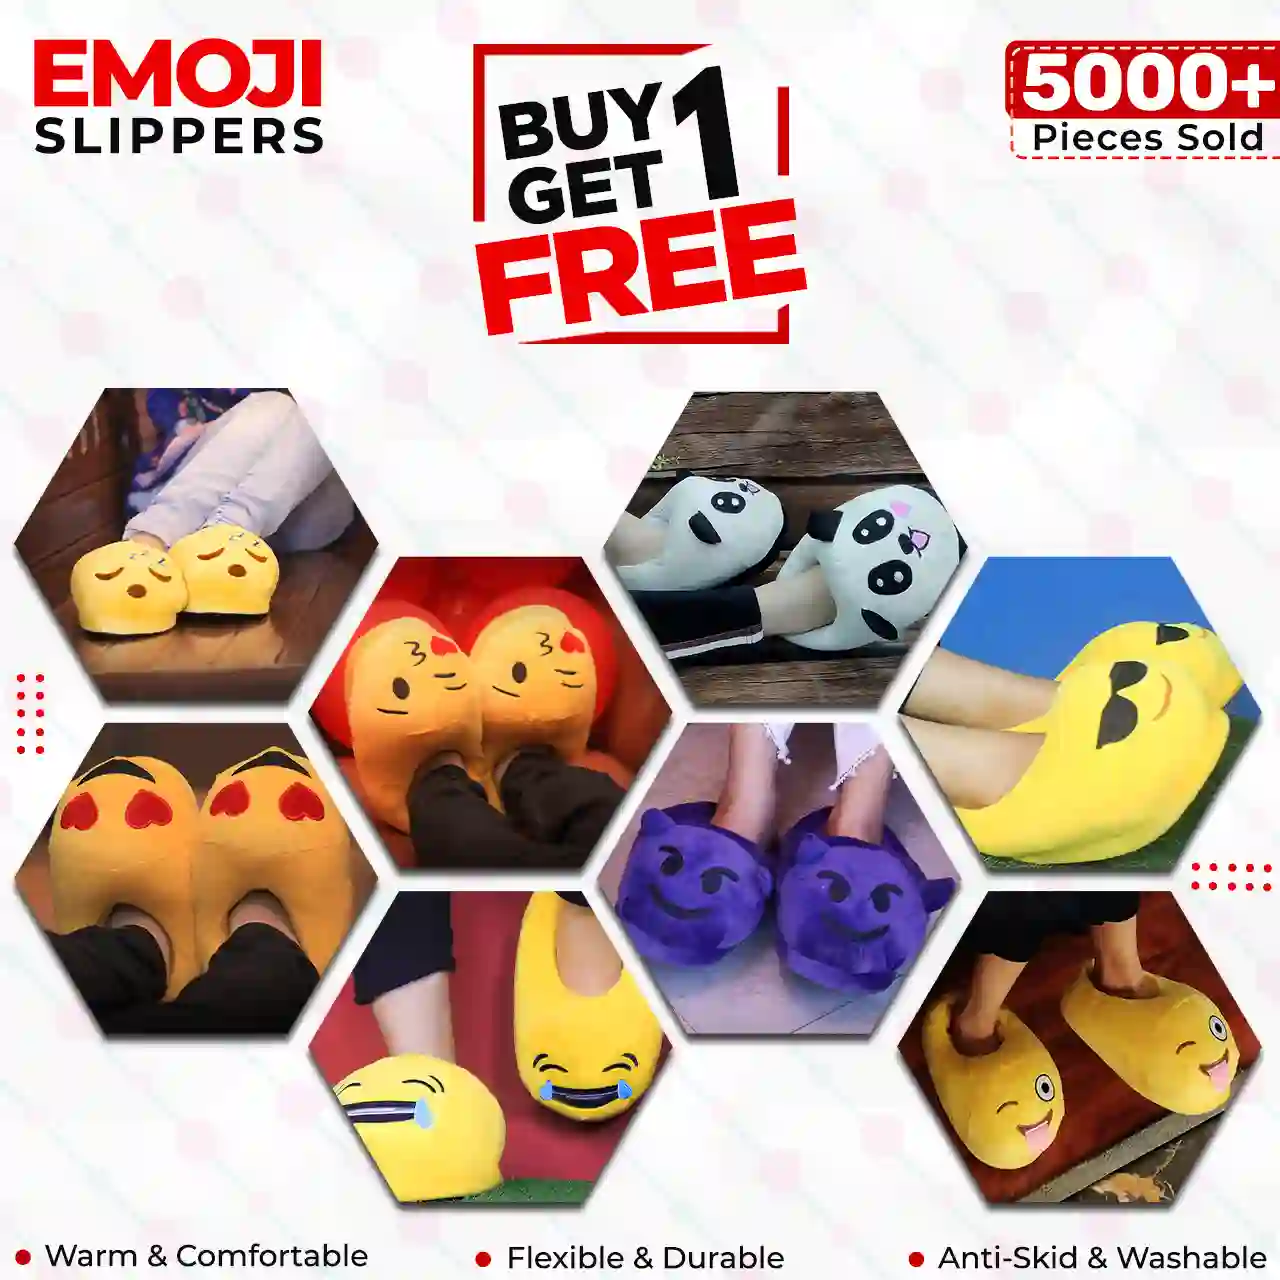 Buy 1 get 1 Free Emoji slippers at best price in Pakistan | Rhizmall.pk